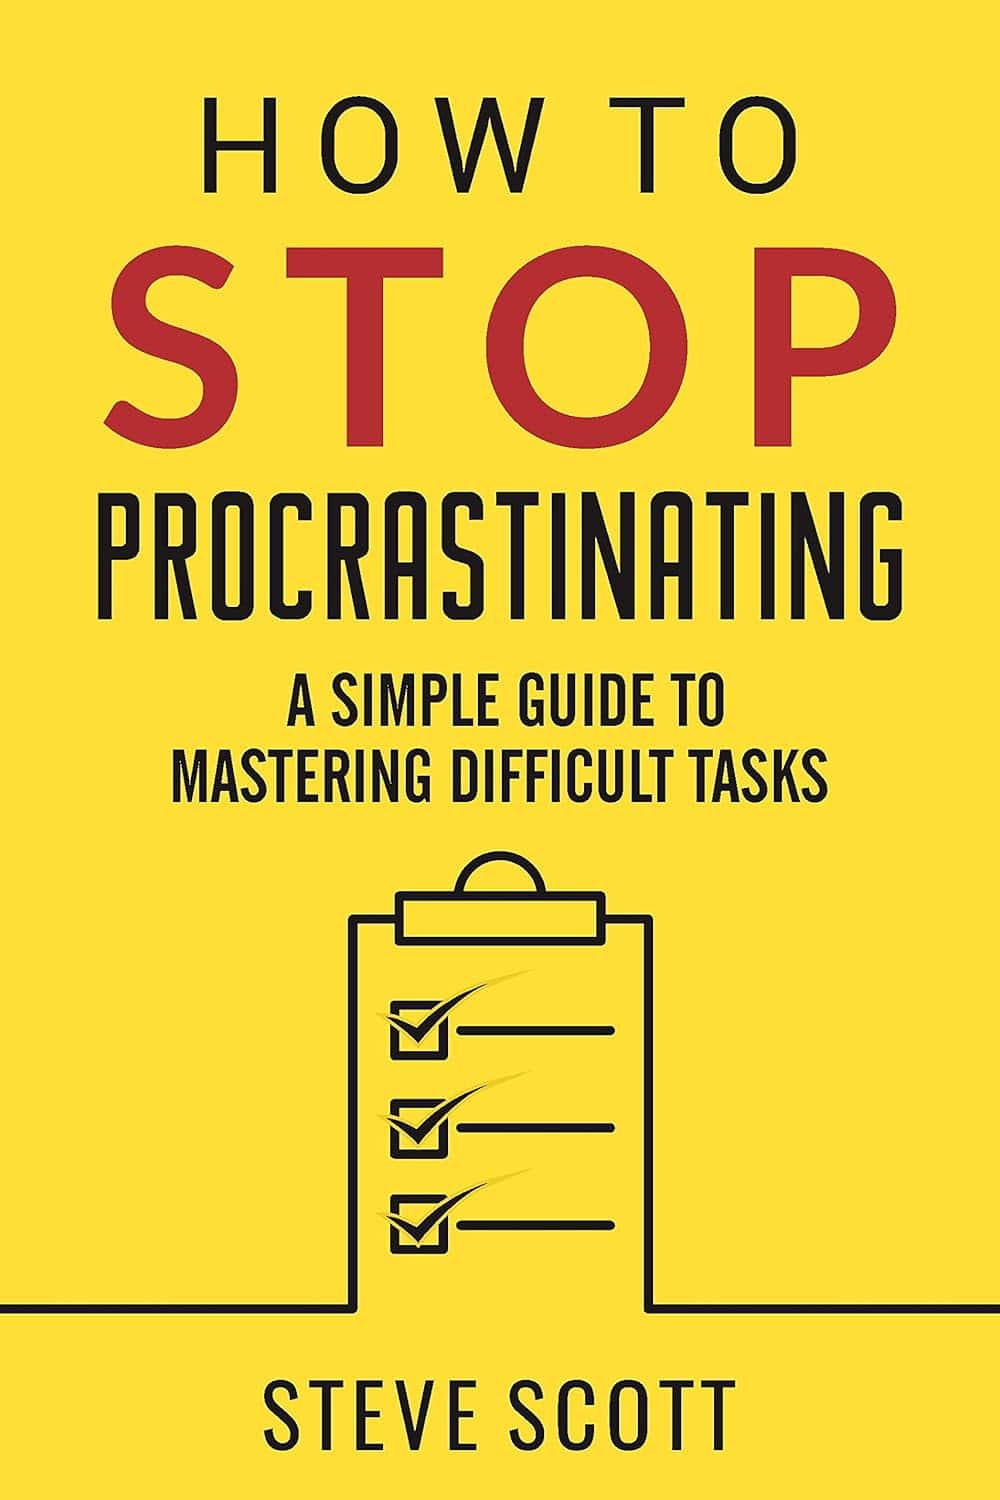 Mastering Difficult Tasks and Breaking the Procrastination Habit